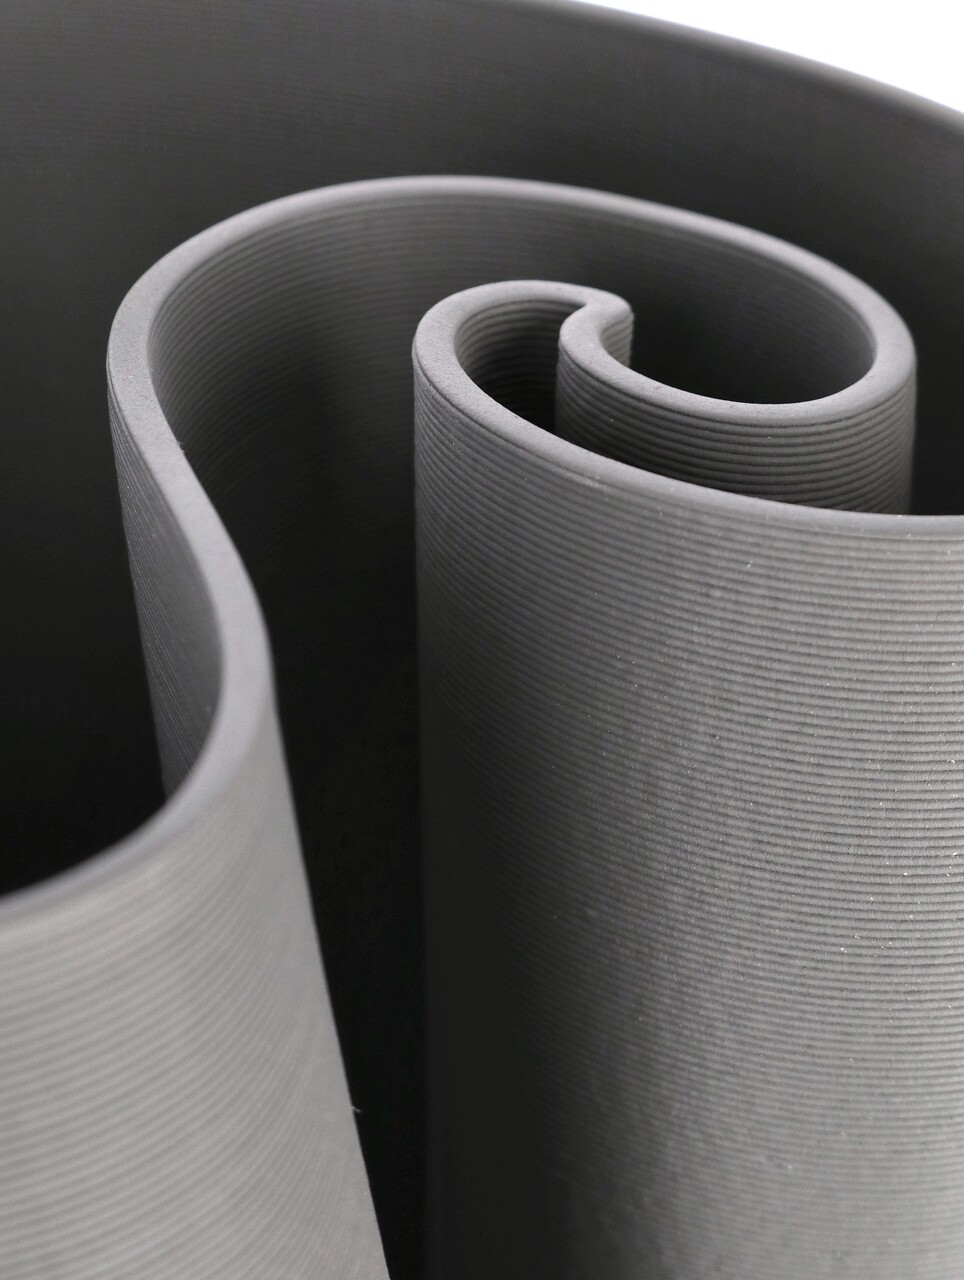 Vaza Maeli, Bizzotto, 20 x 23 x 33.5 cm, ceramica imprimata 3D, interior rezistent la apa, gri